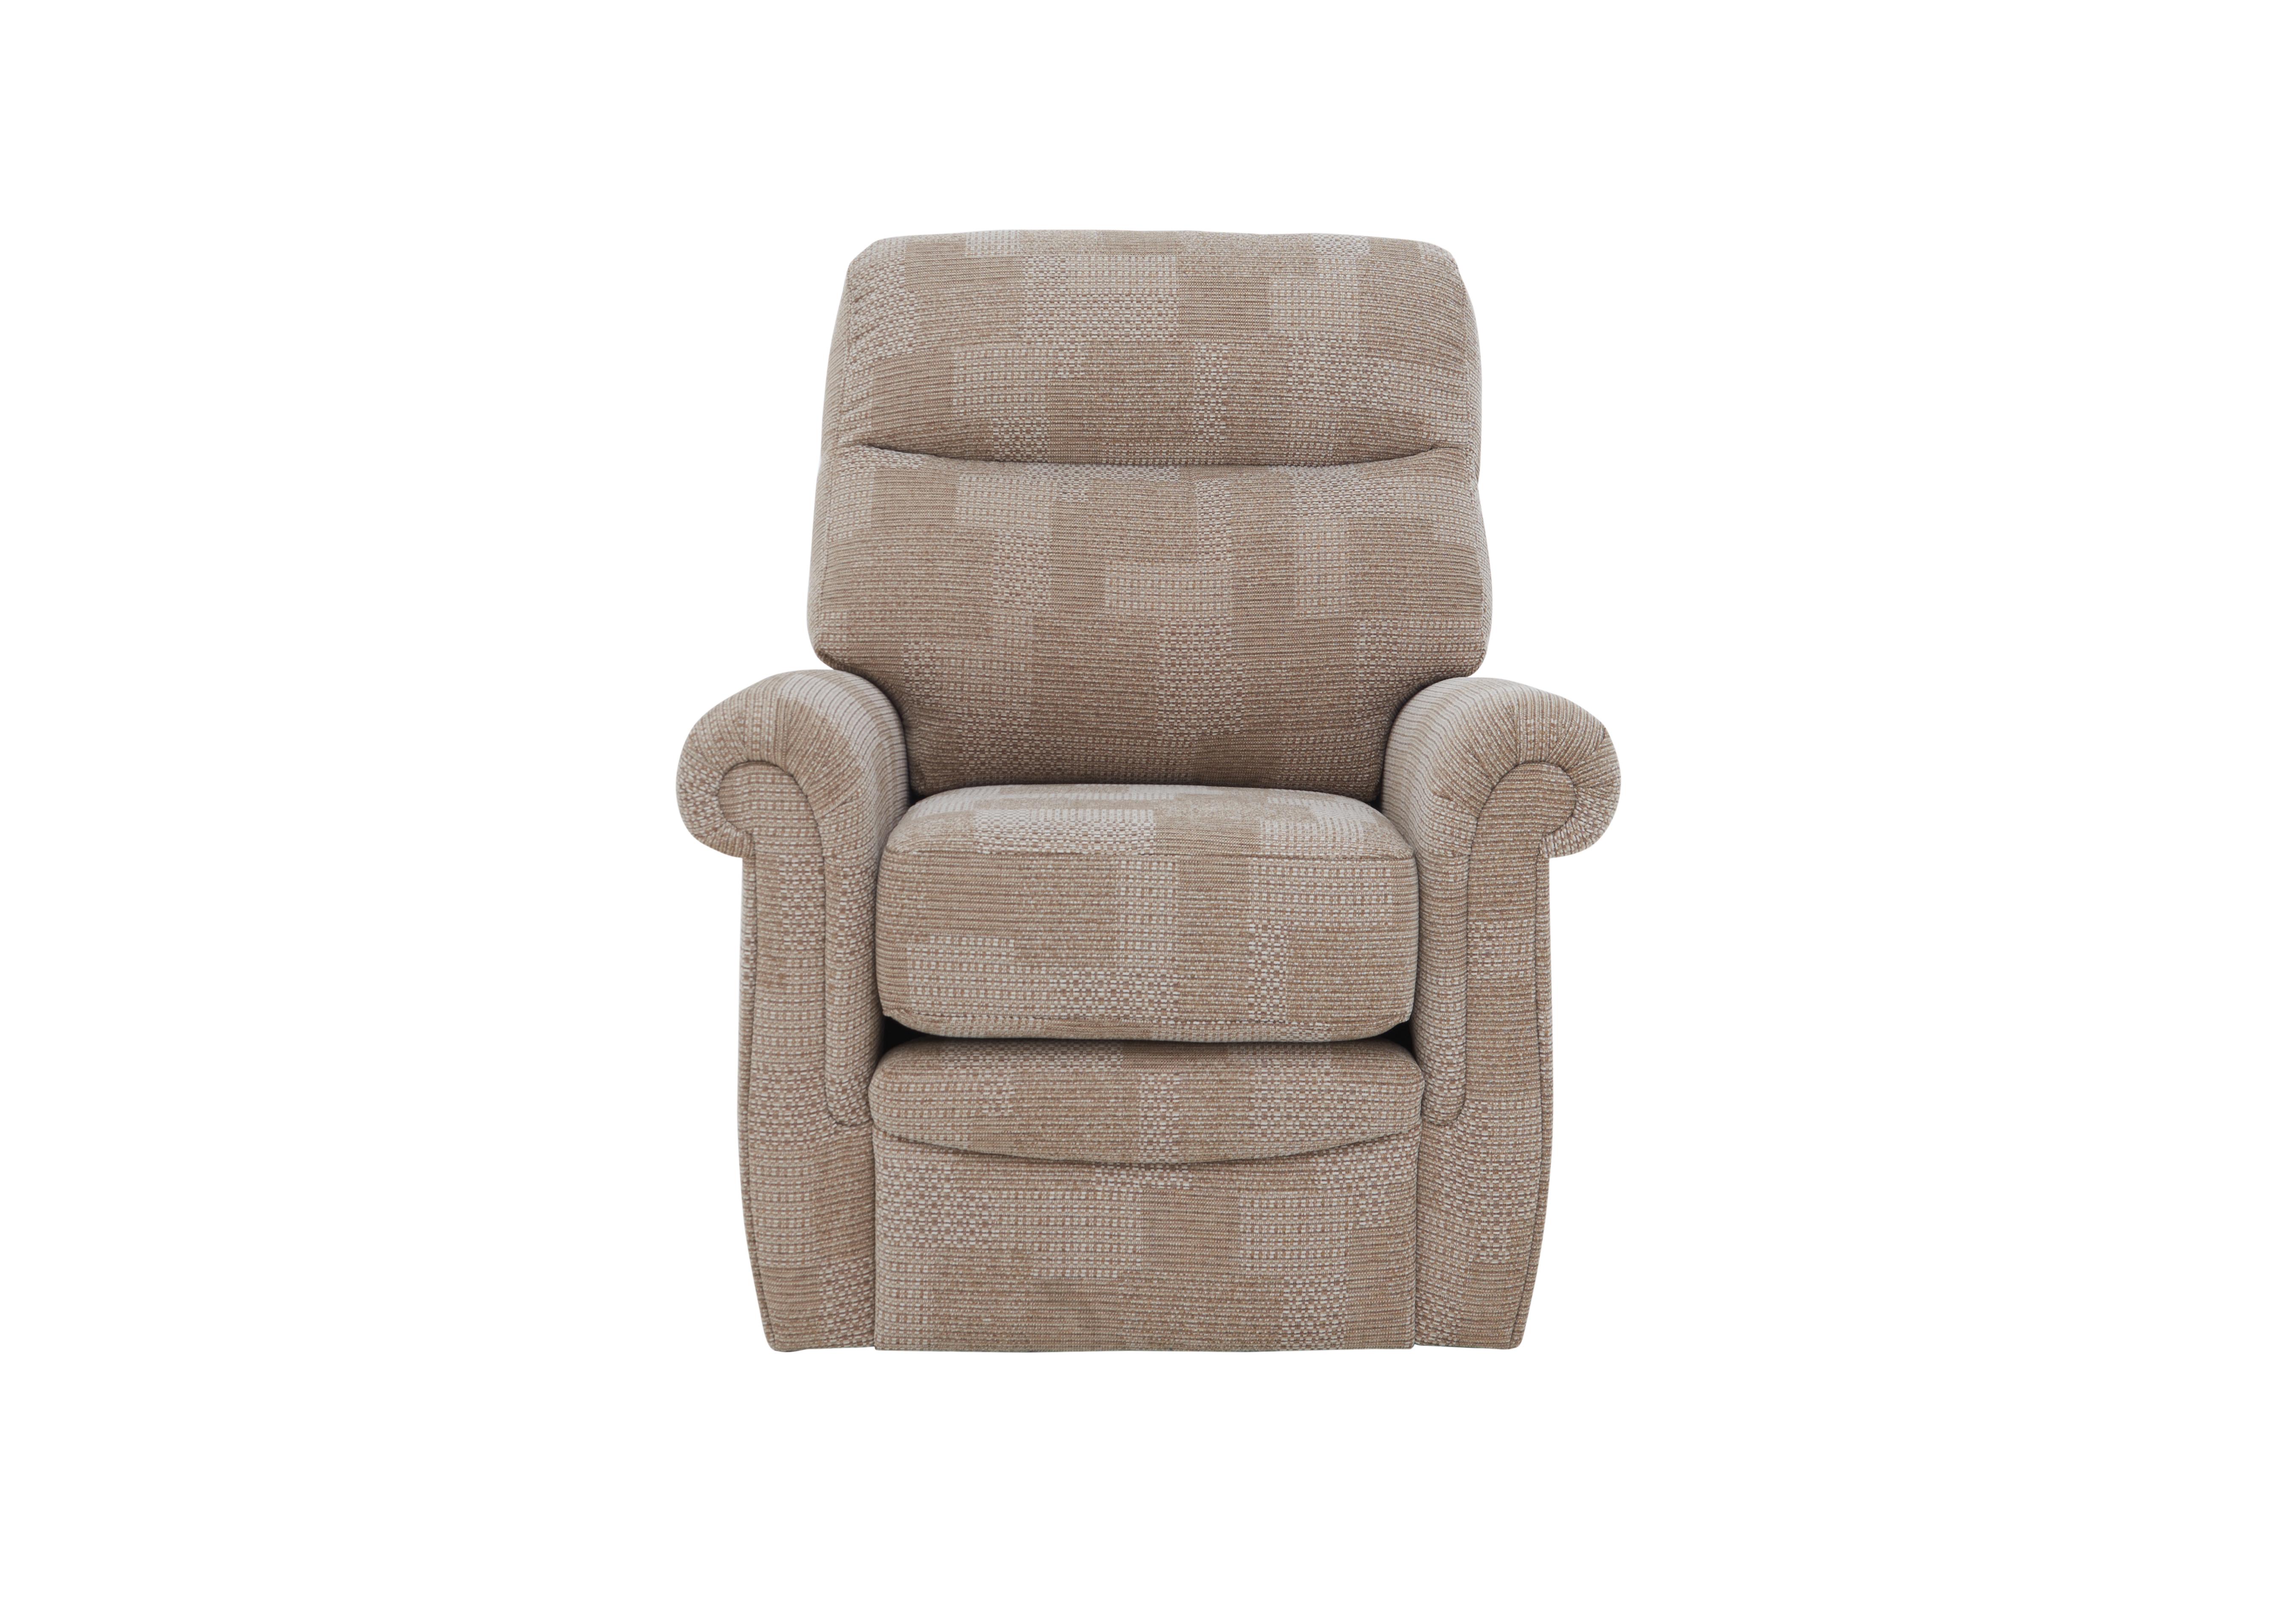 Avon Small Fabric Armchair in A800 Faro Sand on Furniture Village